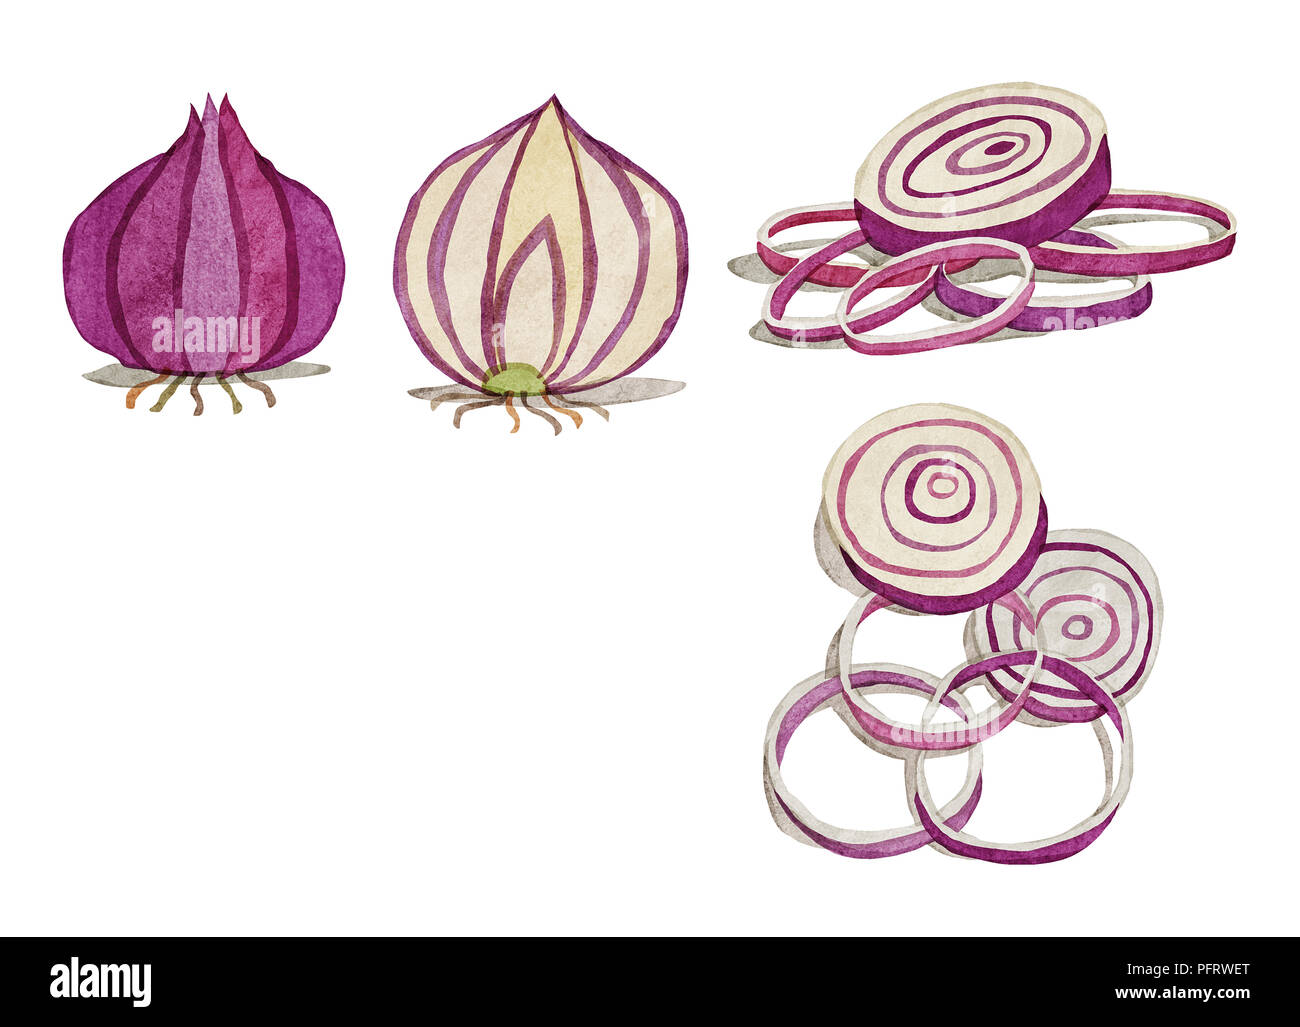 Illustration, Red onions Stock Photo